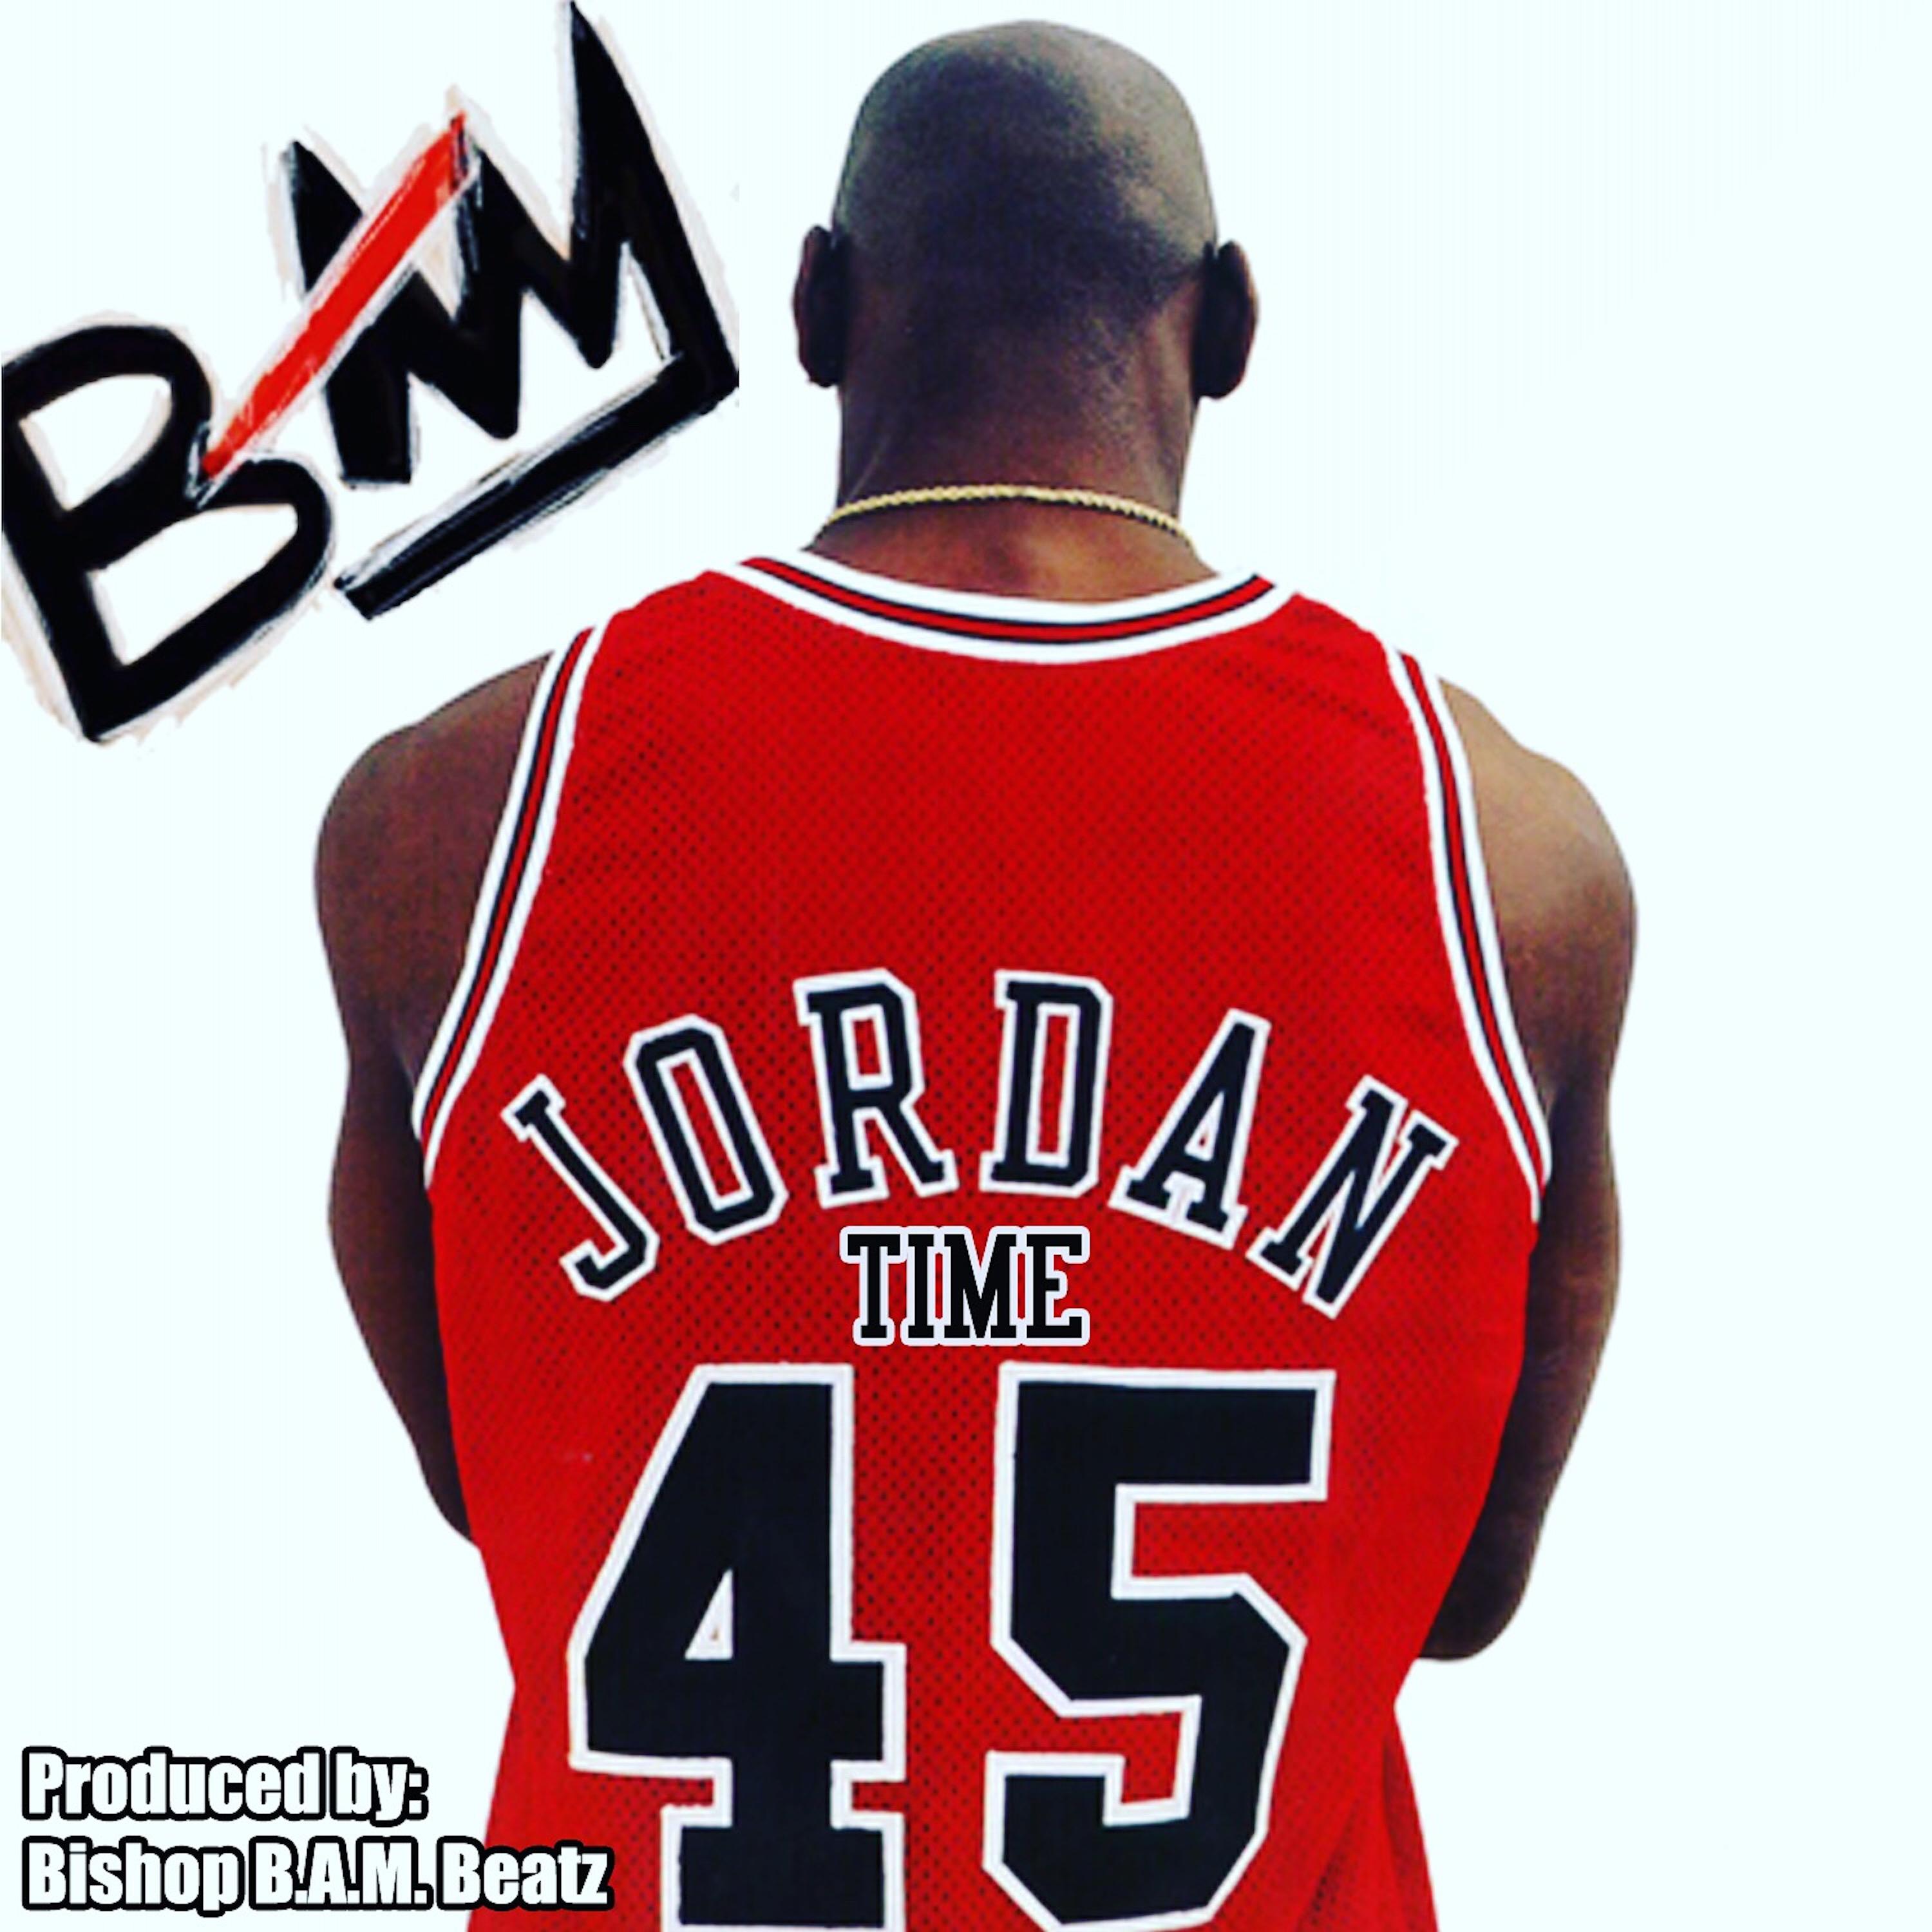 Jordan Time 45